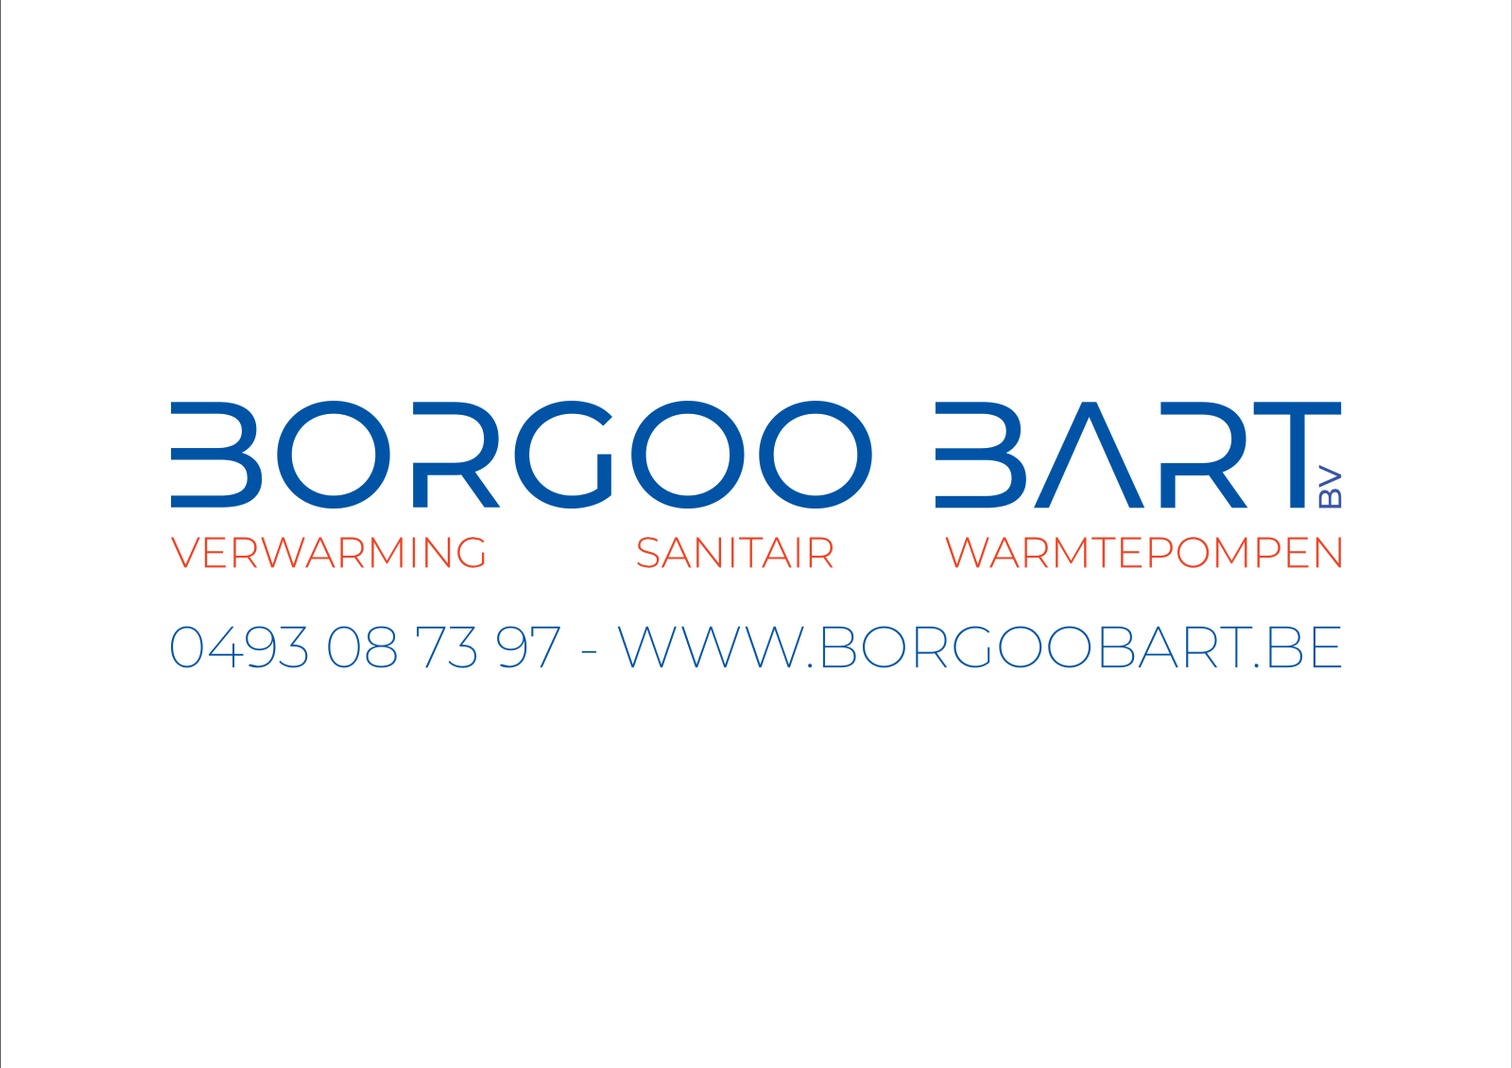 Borgoo Bart BV logo